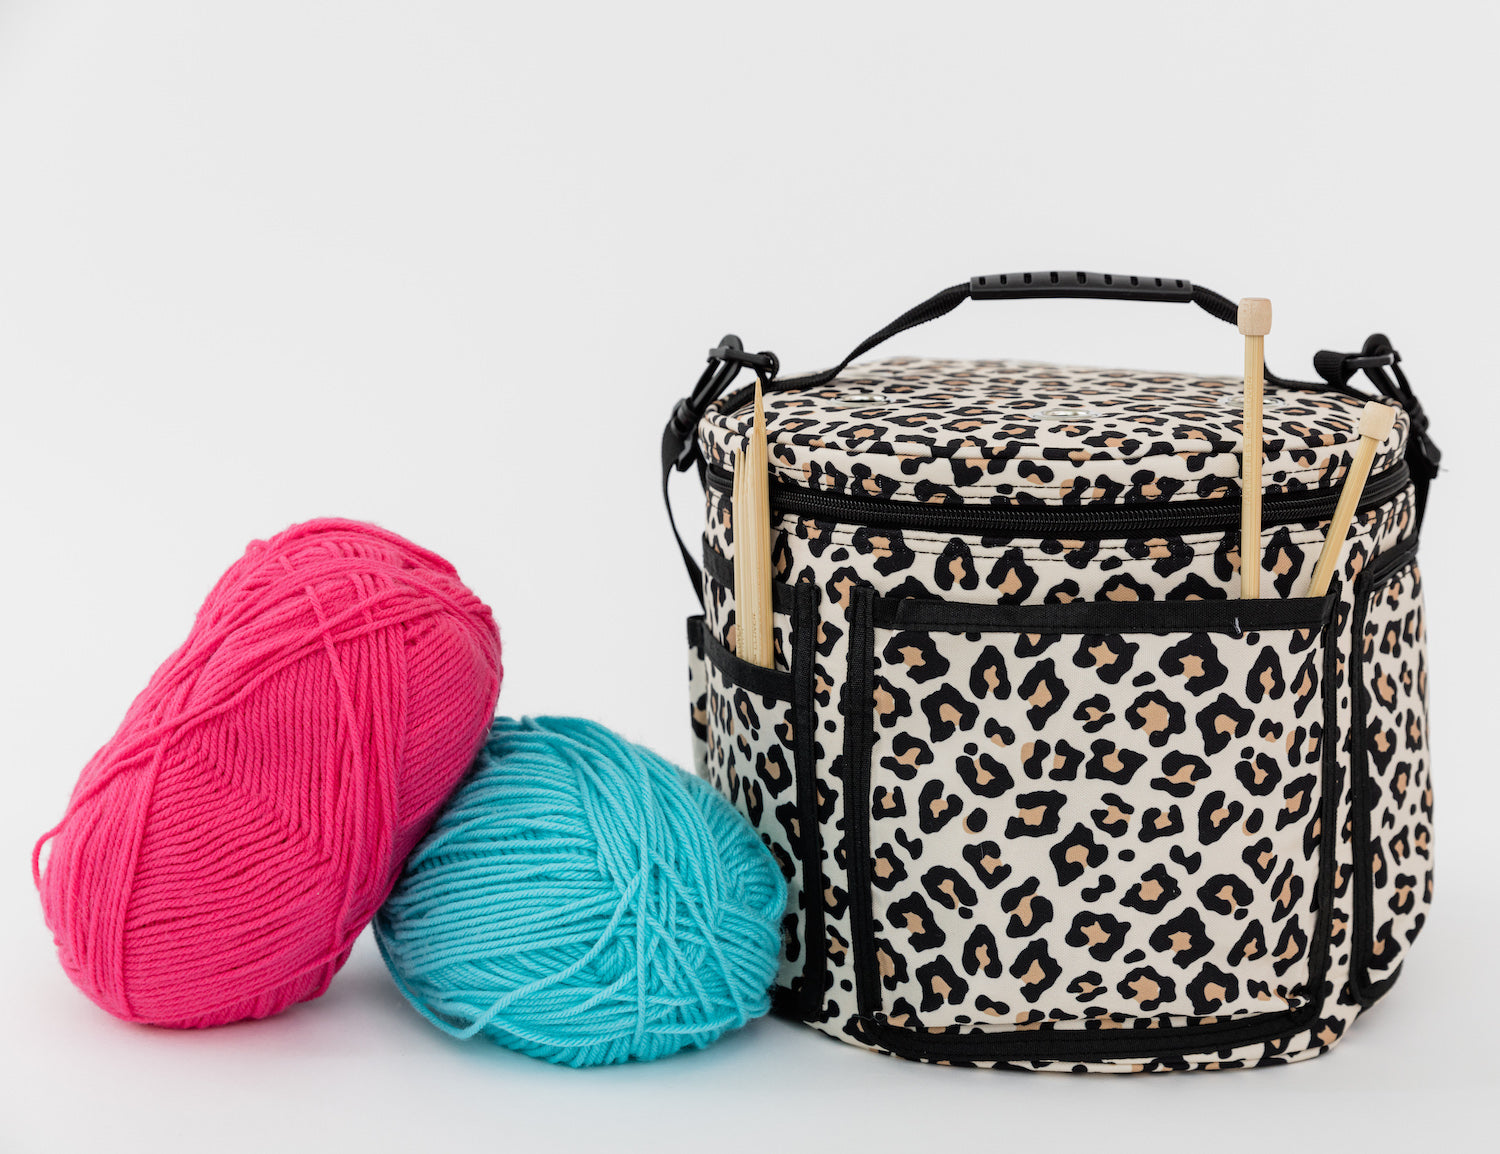 How To Crochet T shirt yarn bag for beginners full tutorial video - YouTube